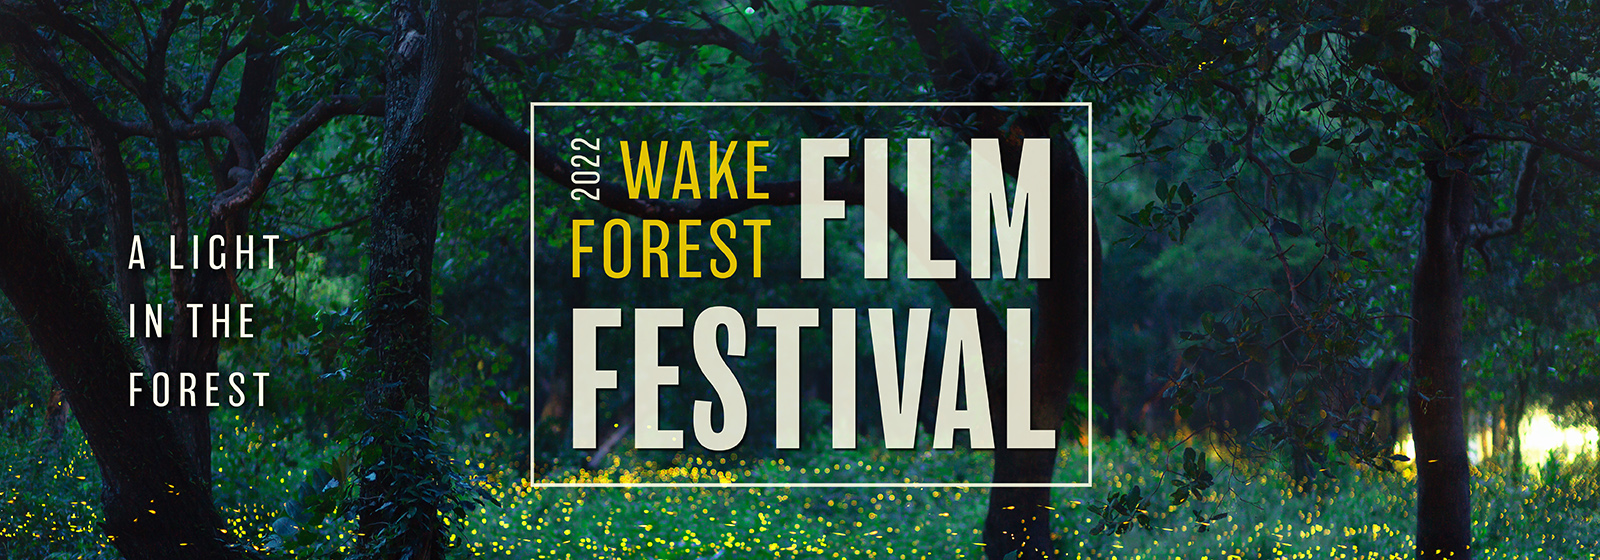 Wake Forest Film Festival Wake Forest Renaissance Centre